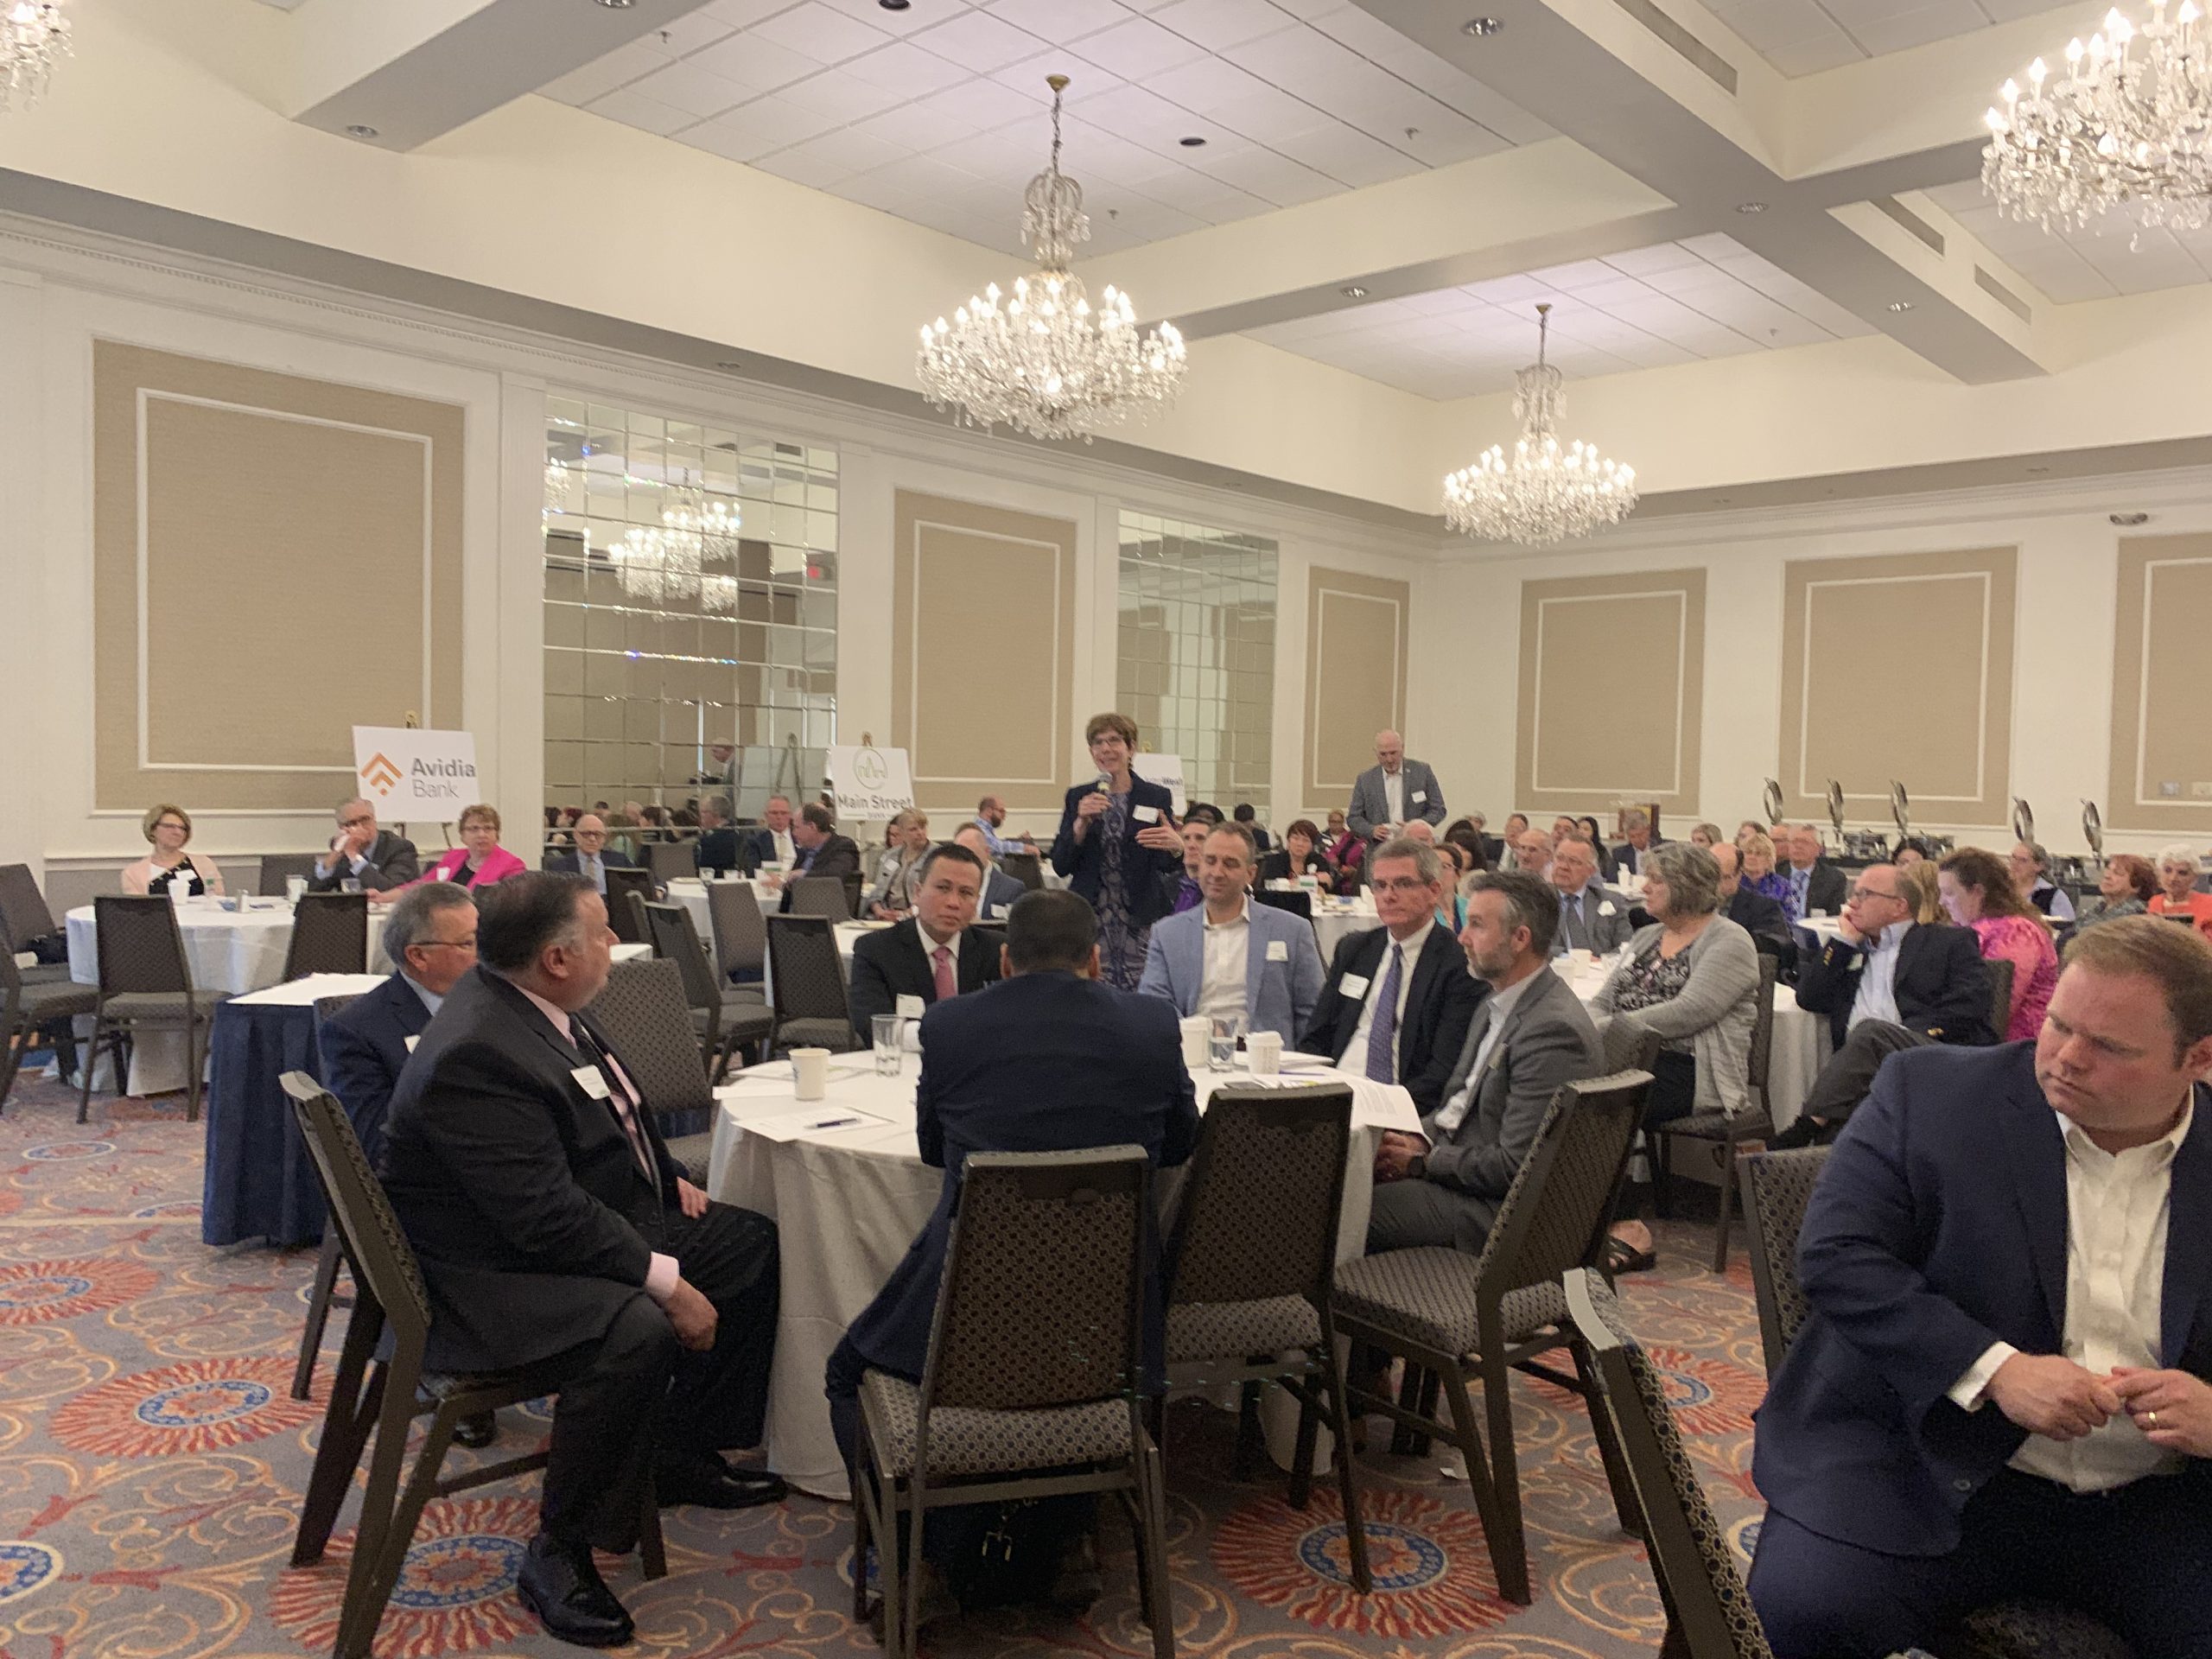 MERC 2019 Annual Conference participants at banquet